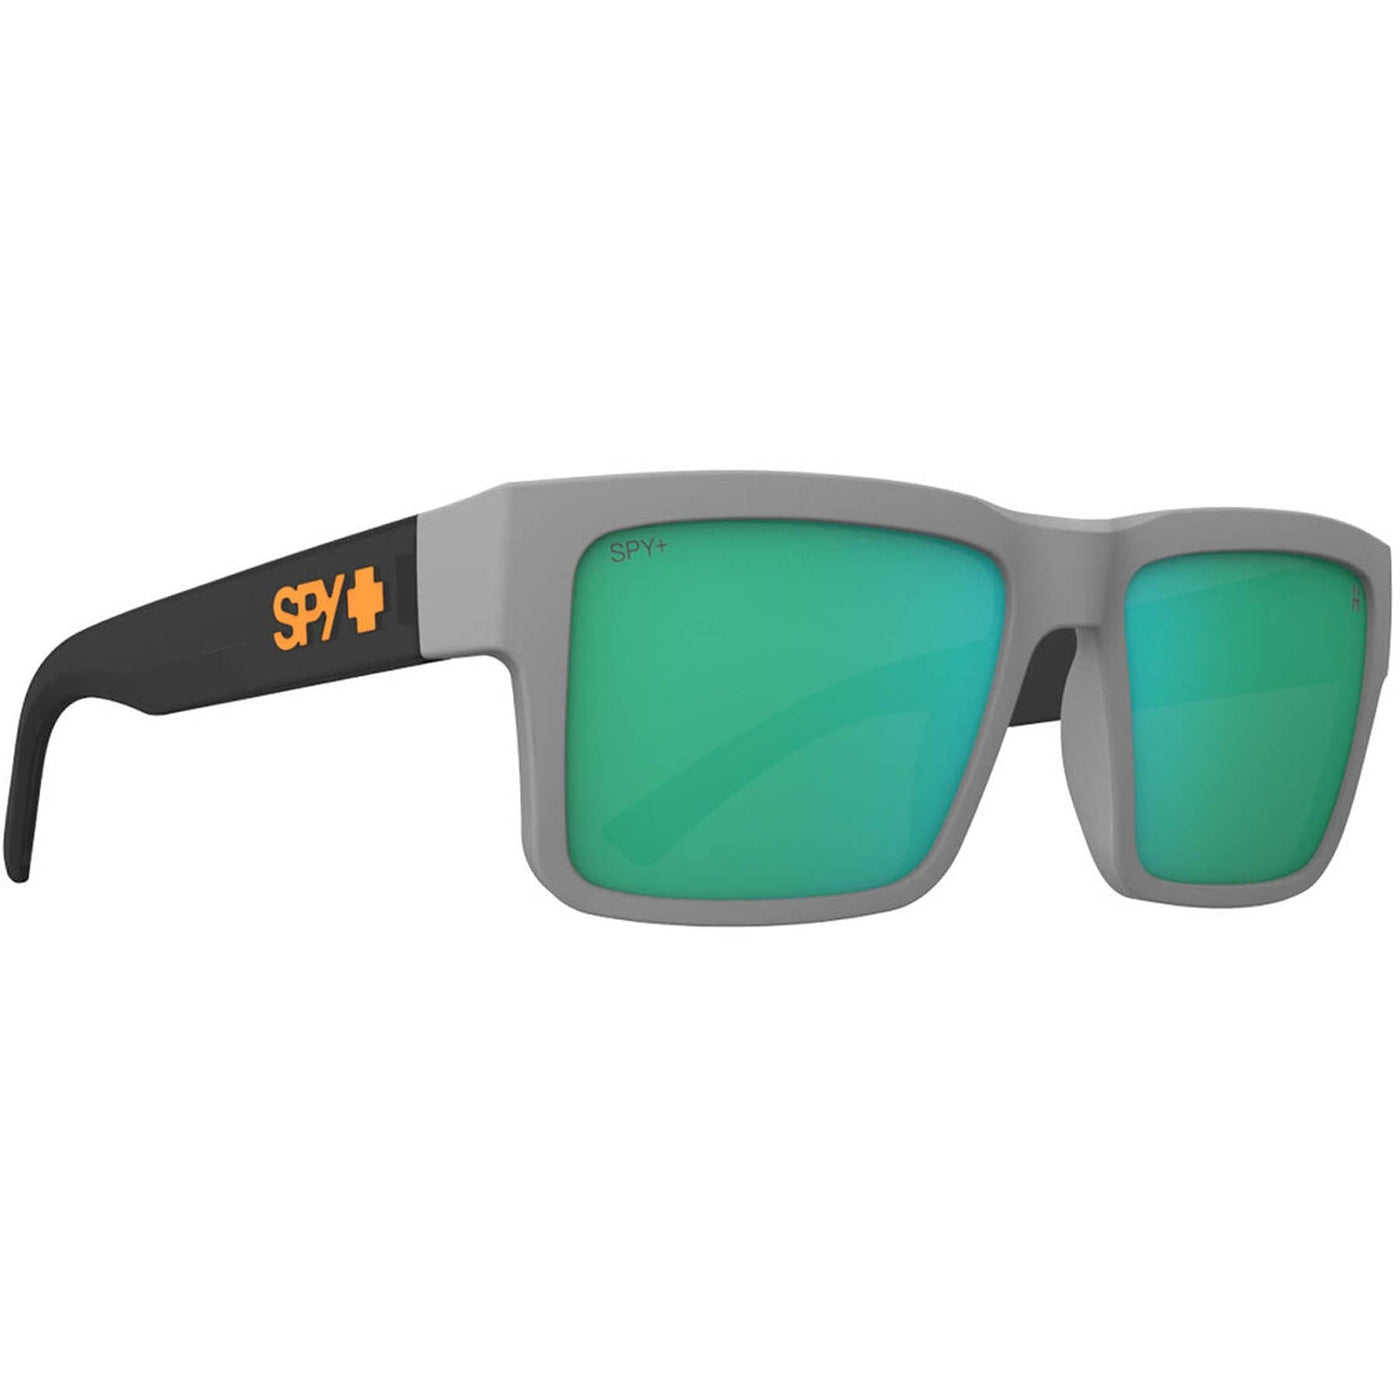 SPY MONTANA Sunglasses, Happy Lens - Light Green 8Lines Shop - Fast Shipping